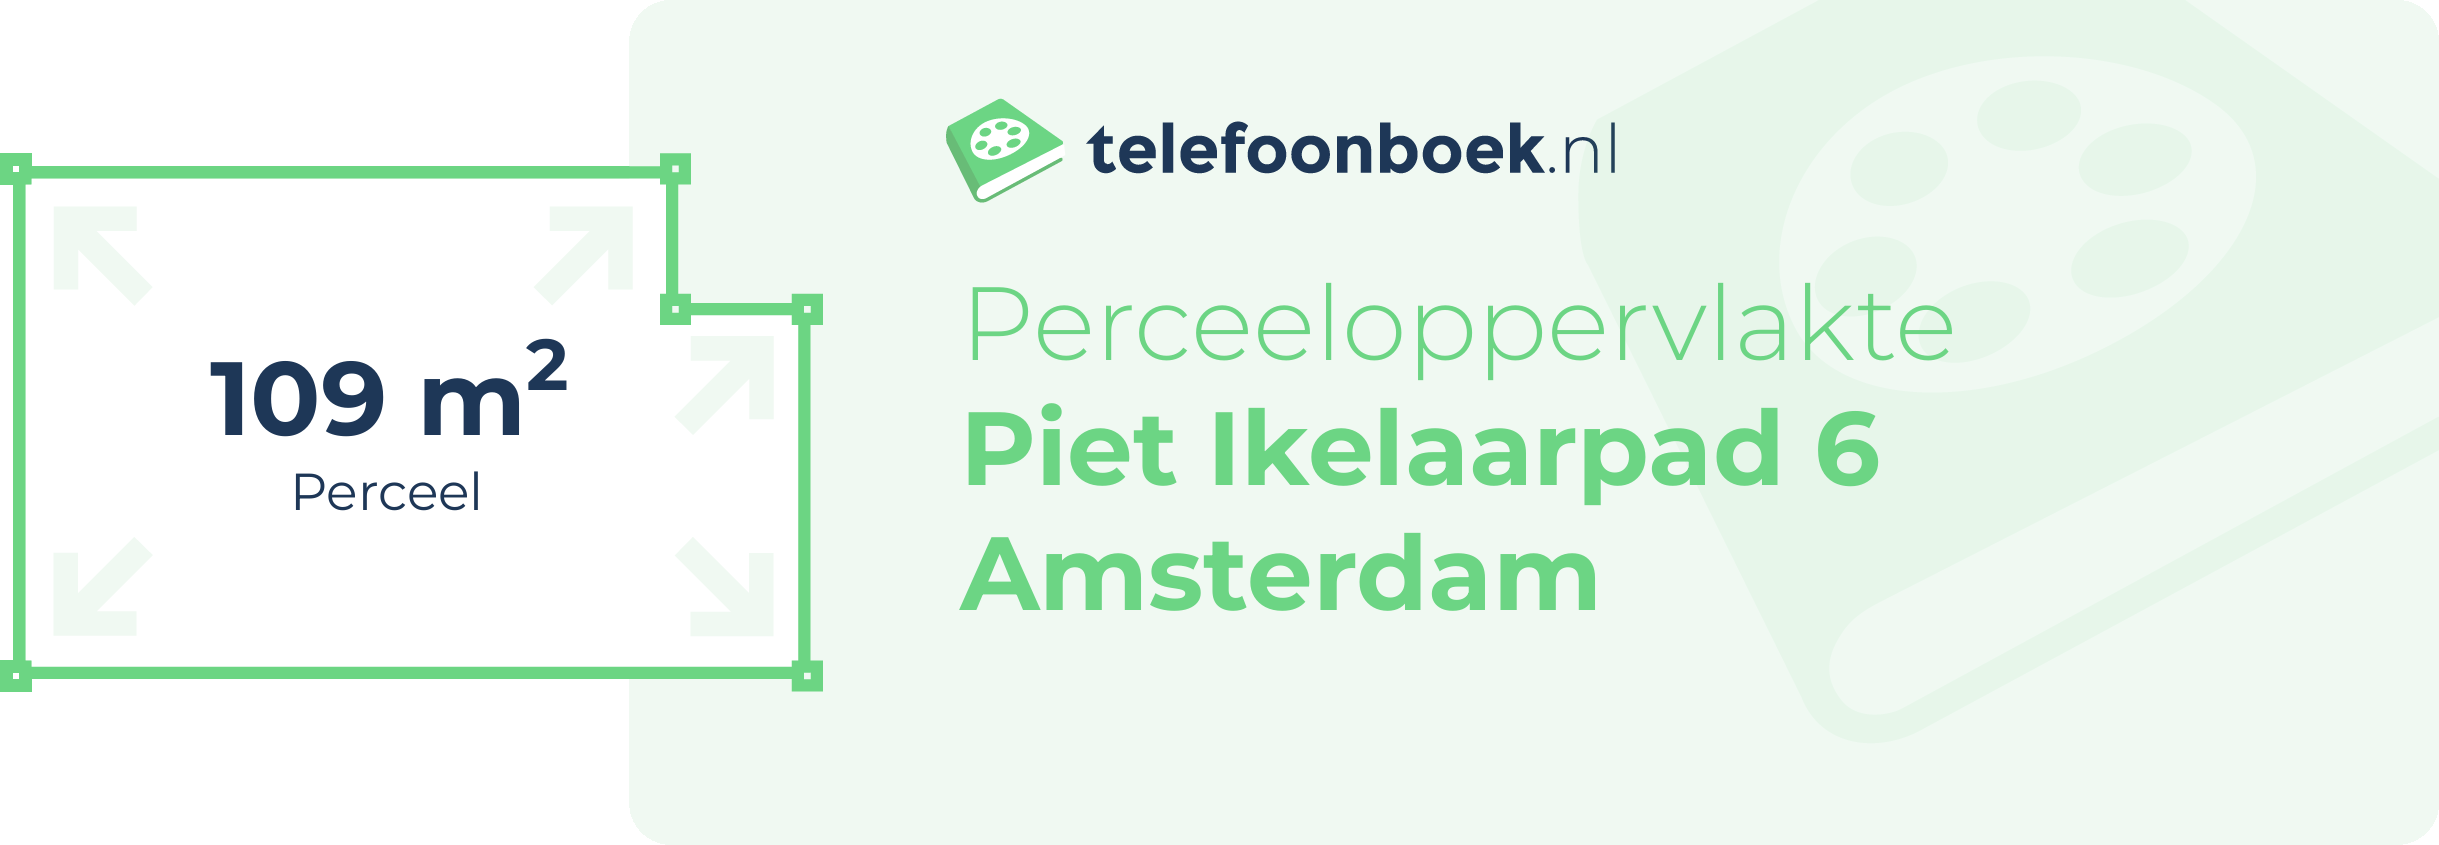 Perceeloppervlakte Piet Ikelaarpad 6 Amsterdam